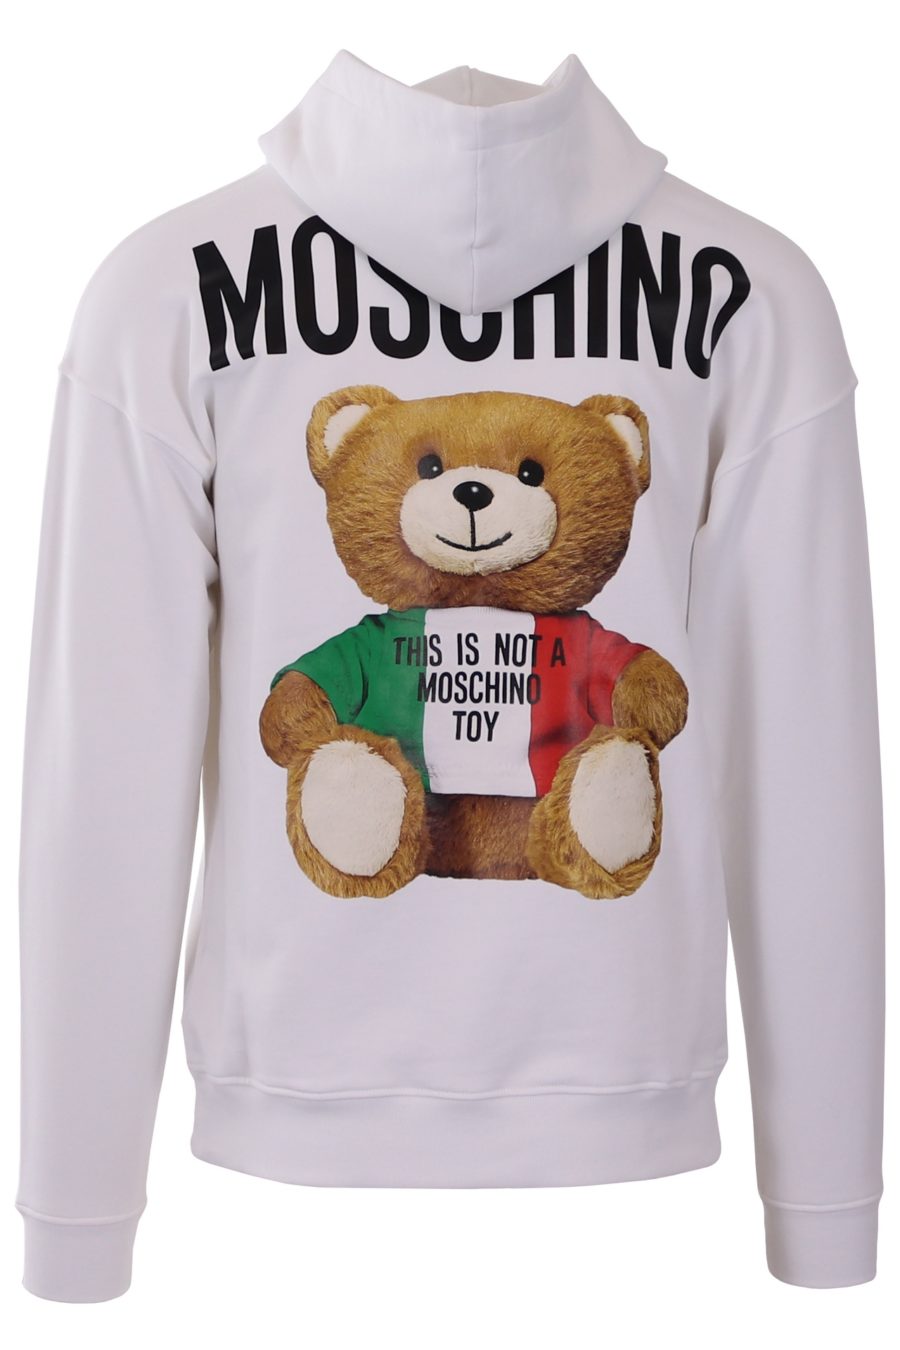 Sweatshirt Moschino Couture weißer Hoodie Teddy in italienischen Farben - 84c2662e6966425709301485e96478348e7a1aa5